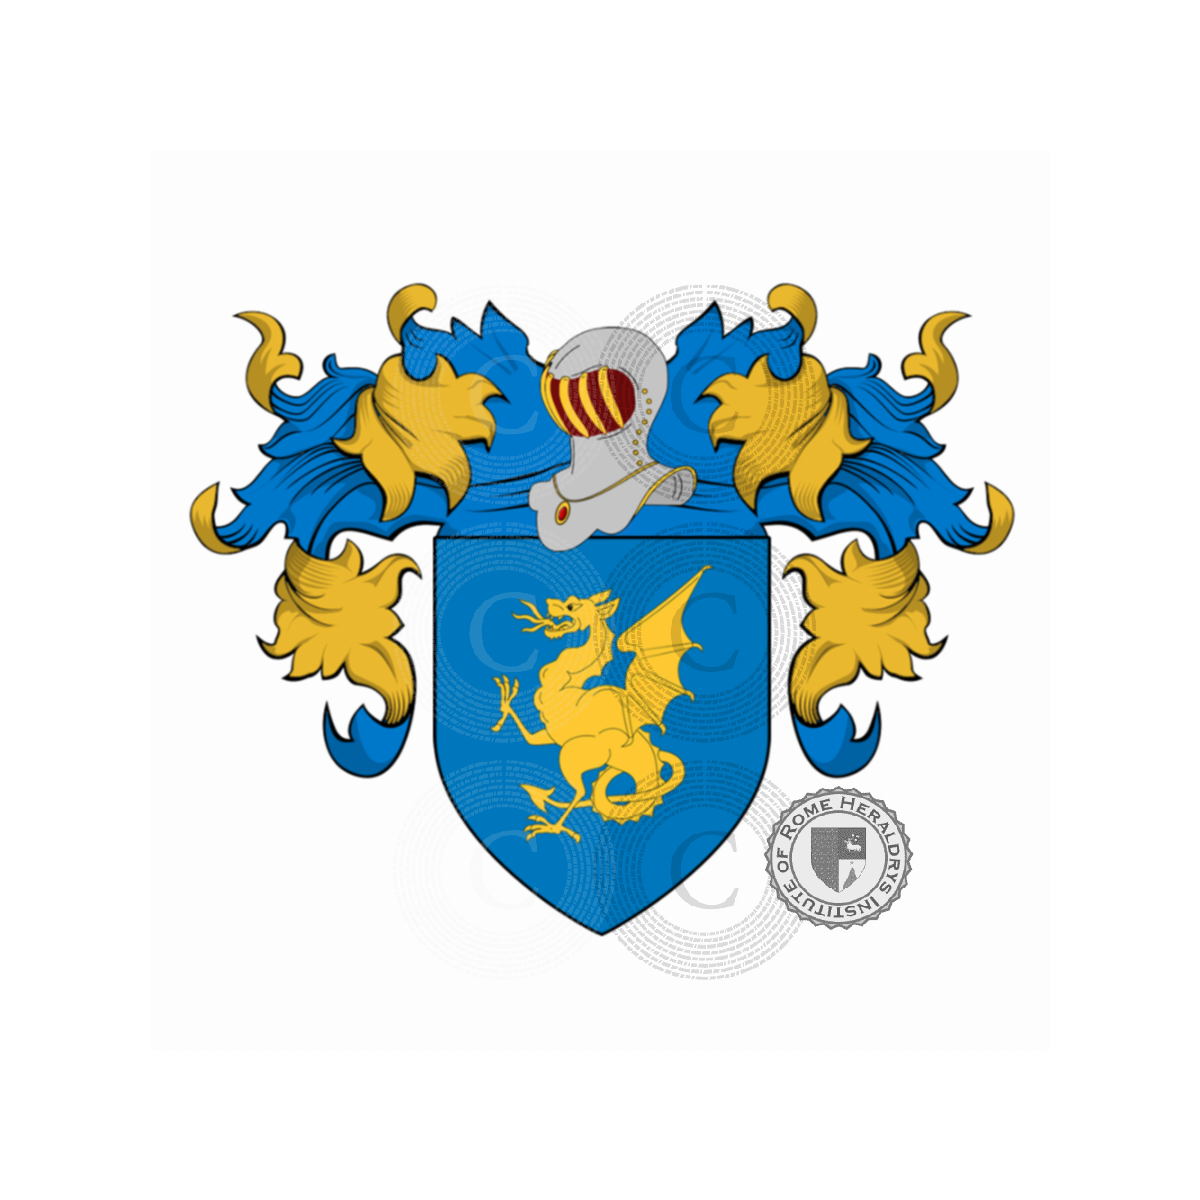 Wappen der FamilieCecchi, Cecchi del Cane,Cecchi del Drago,Cecchi delle Ruote,Cecchi Toldi